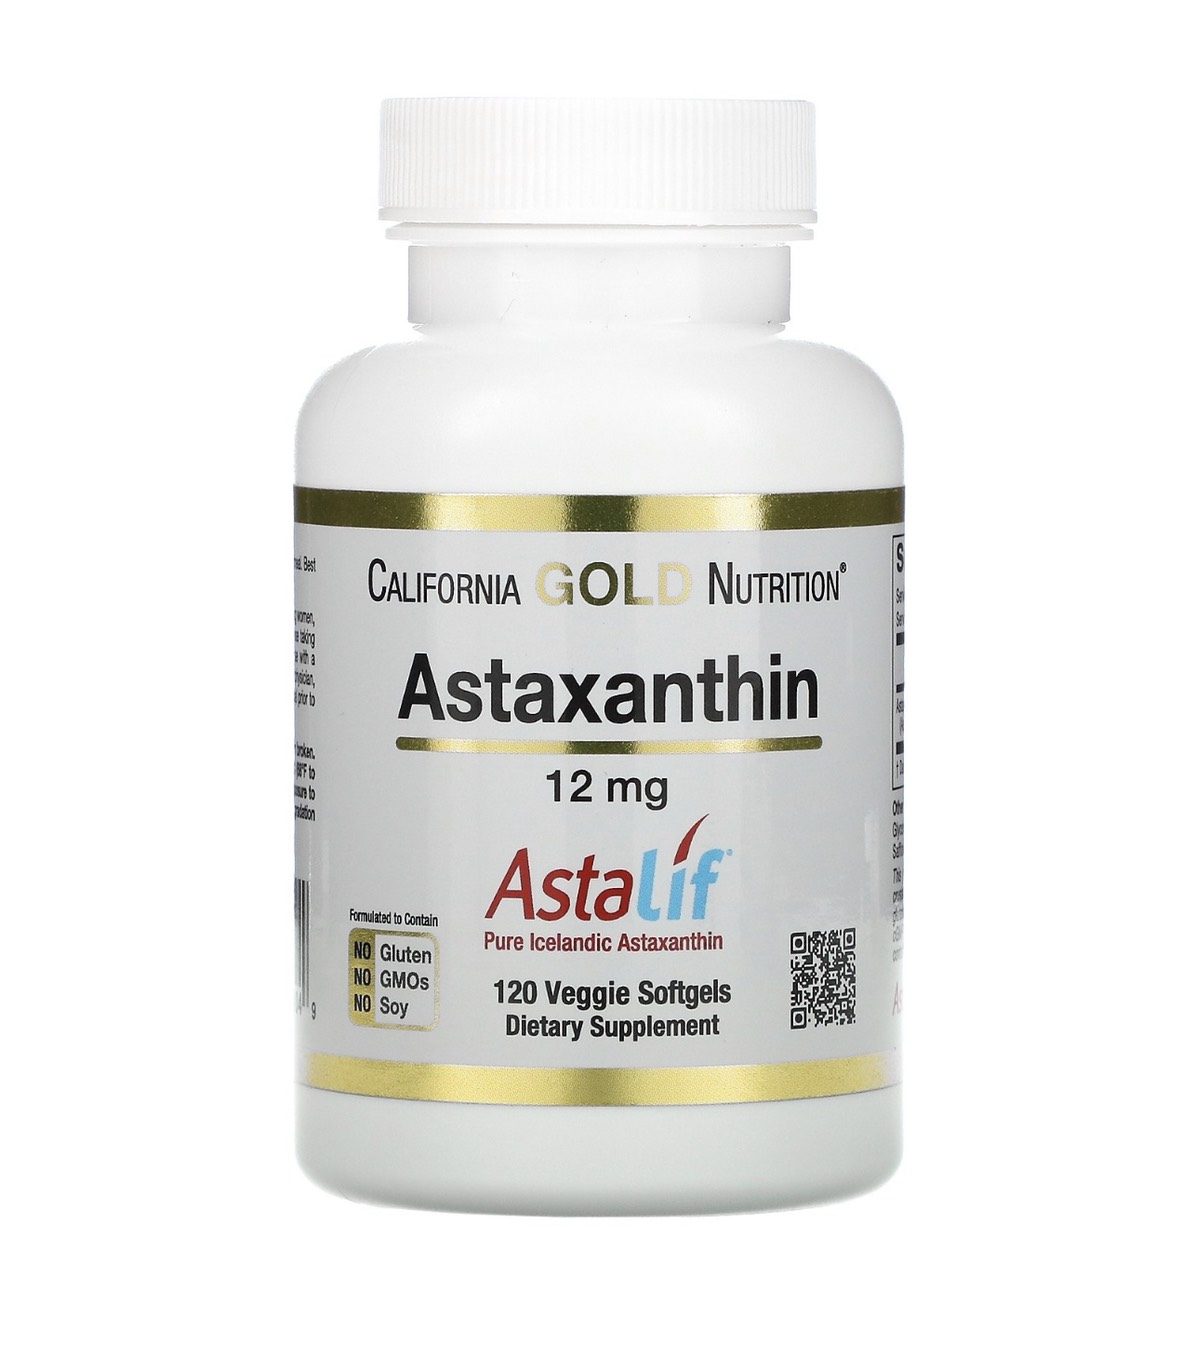 California Gold Nutrition, Astaxanthin, AstaLif Pure Icelandic, 12 mg, 30,120 Veggie Softgels